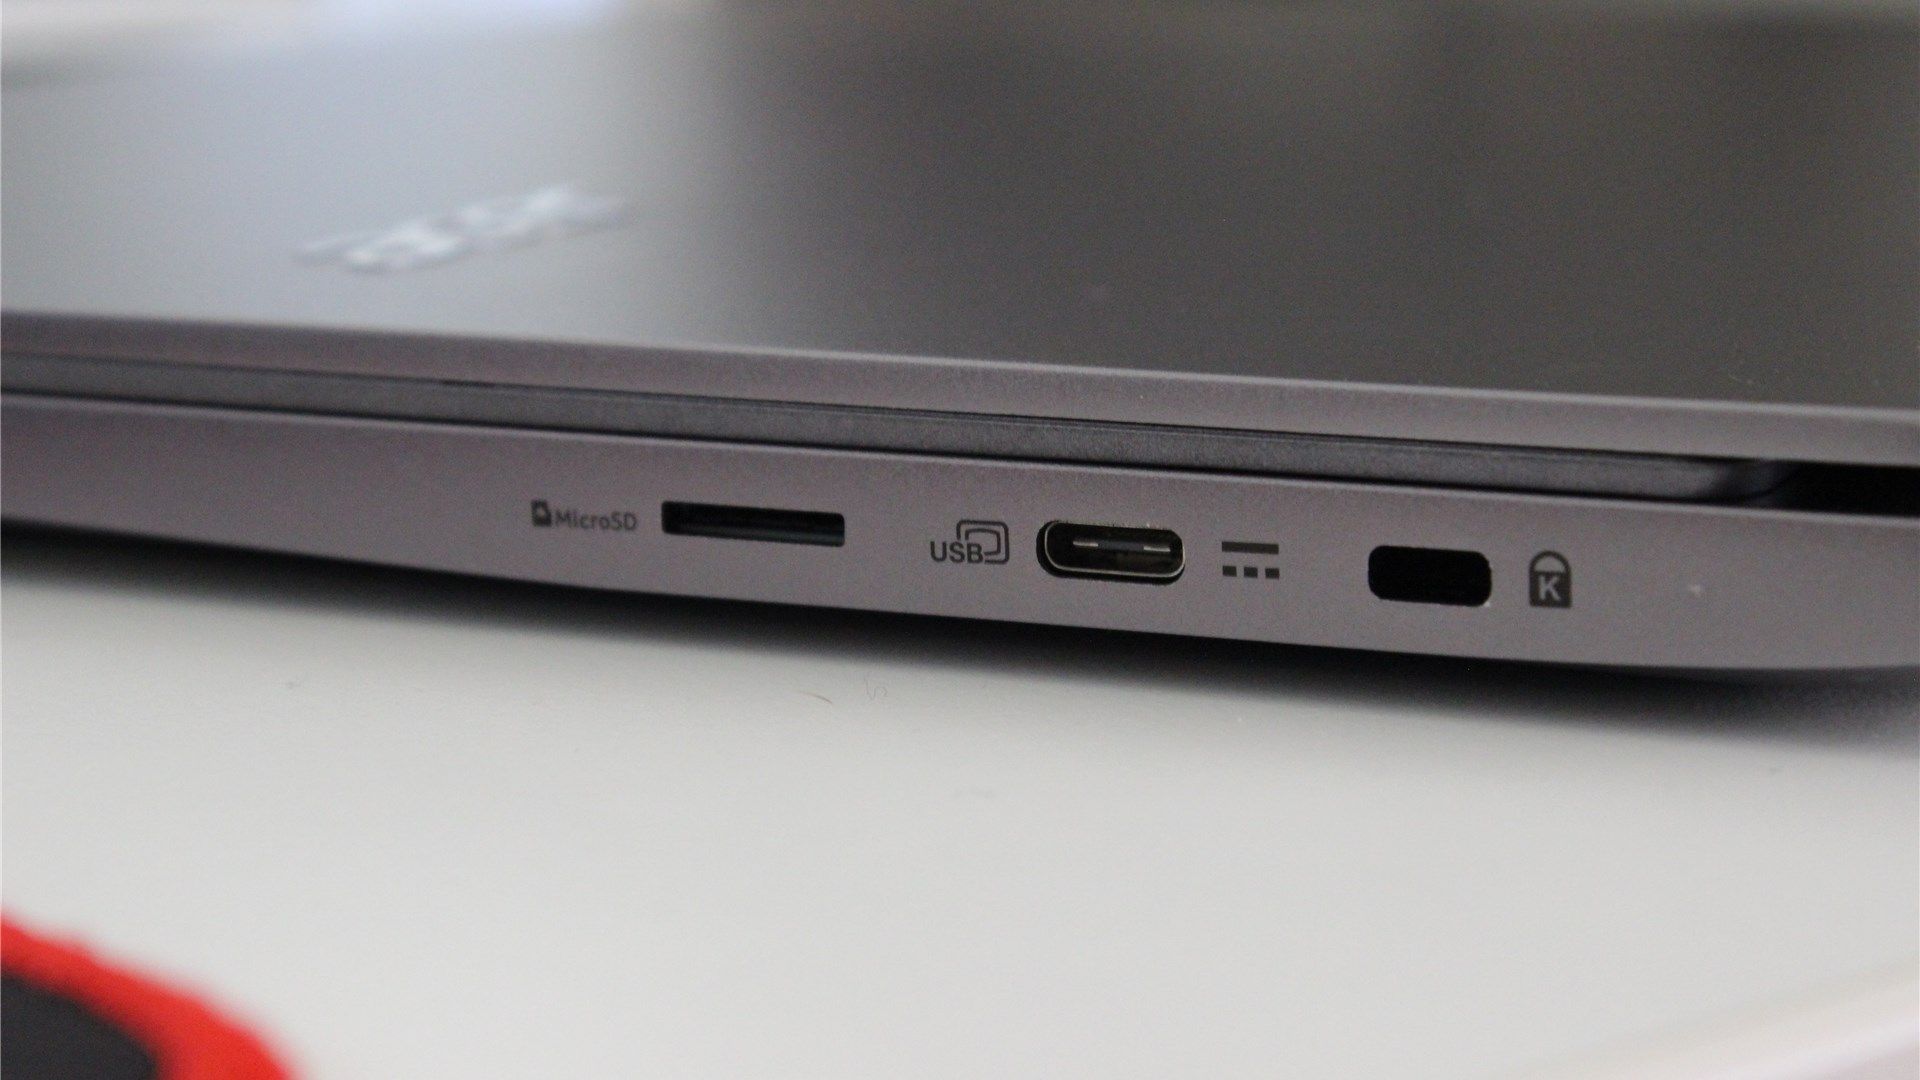 The microSD slot, USB-C port, and Kingston lock